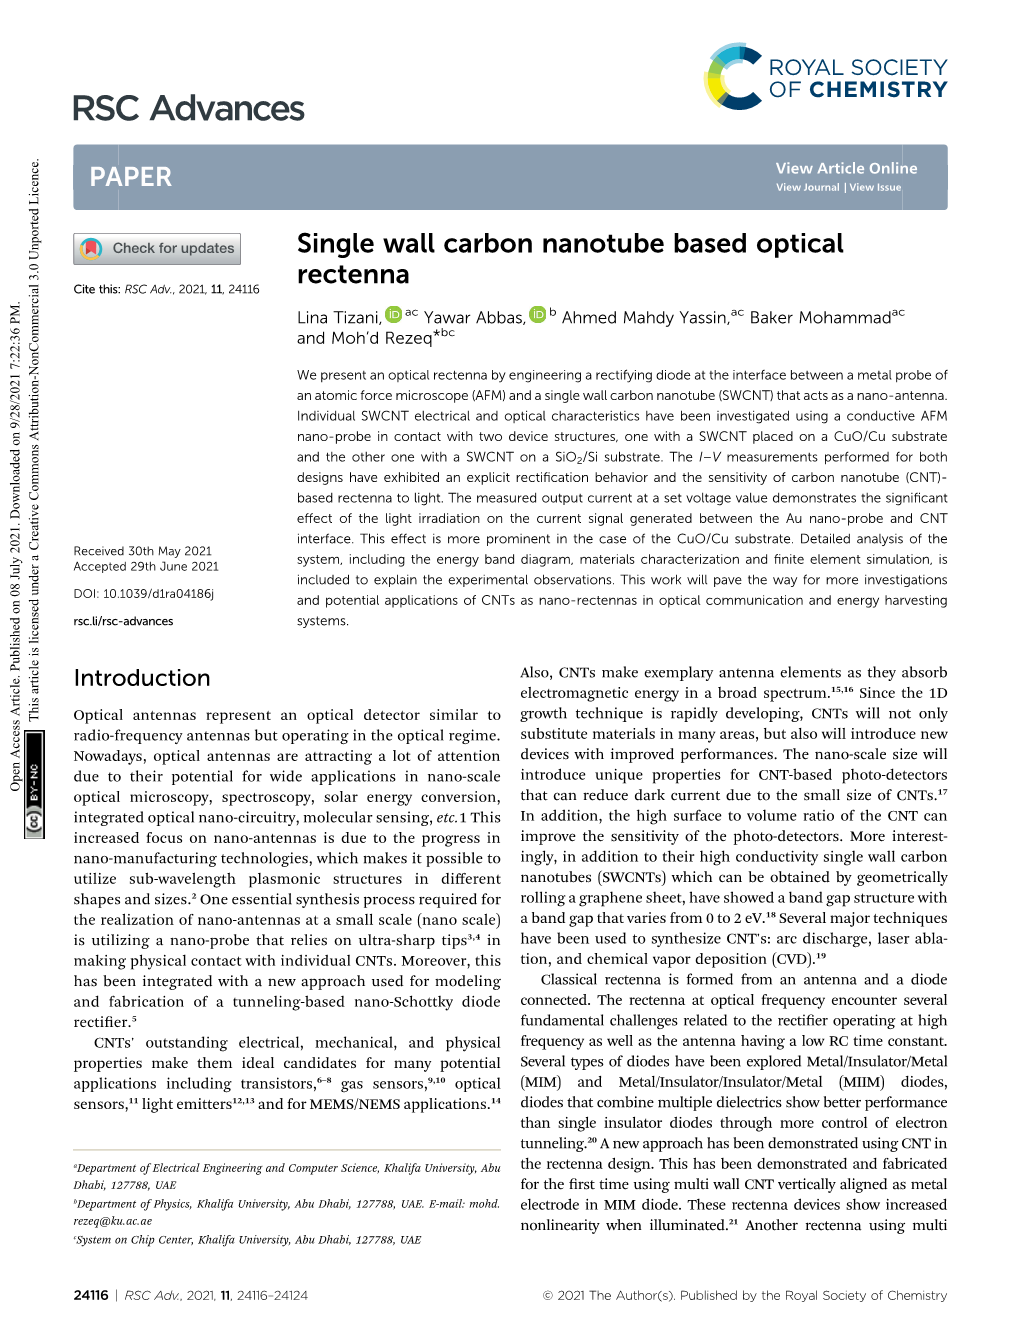 Single Wall Carbon Nanotube Based Optical Rectenna